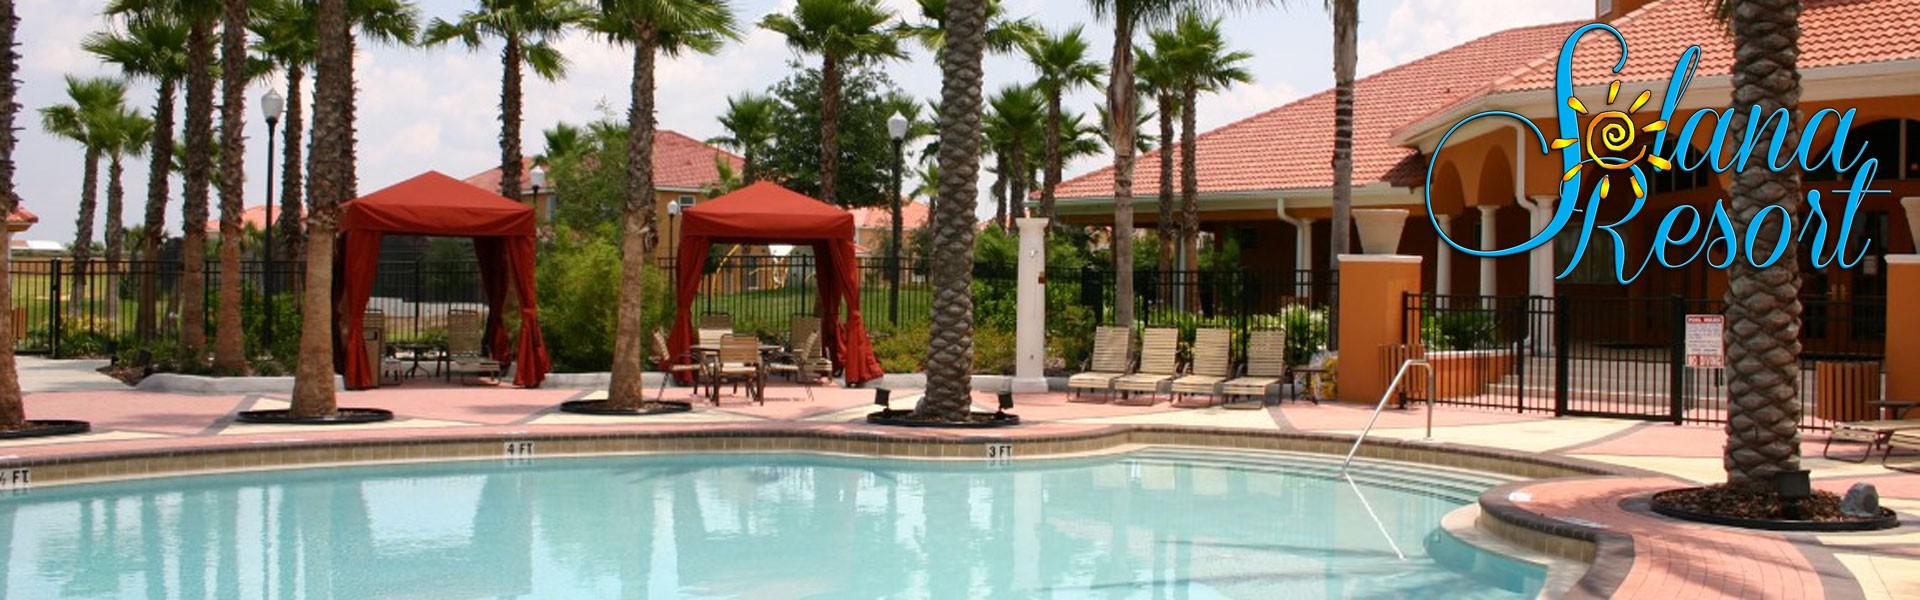 Solana Resort Florida